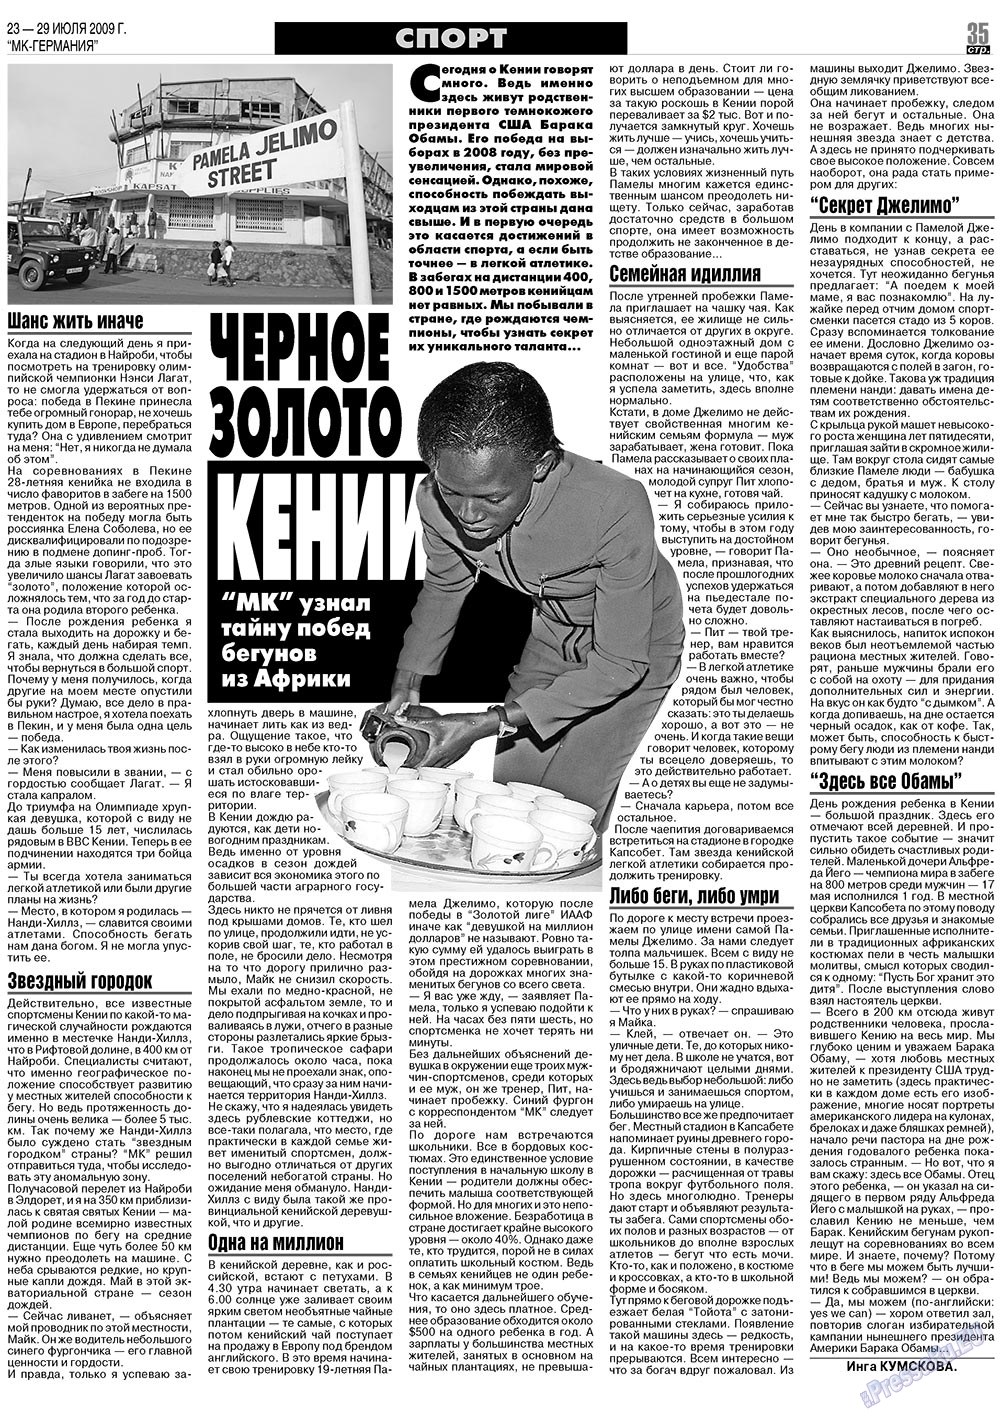 МК-Германия, газета. 2009 №30 стр.35